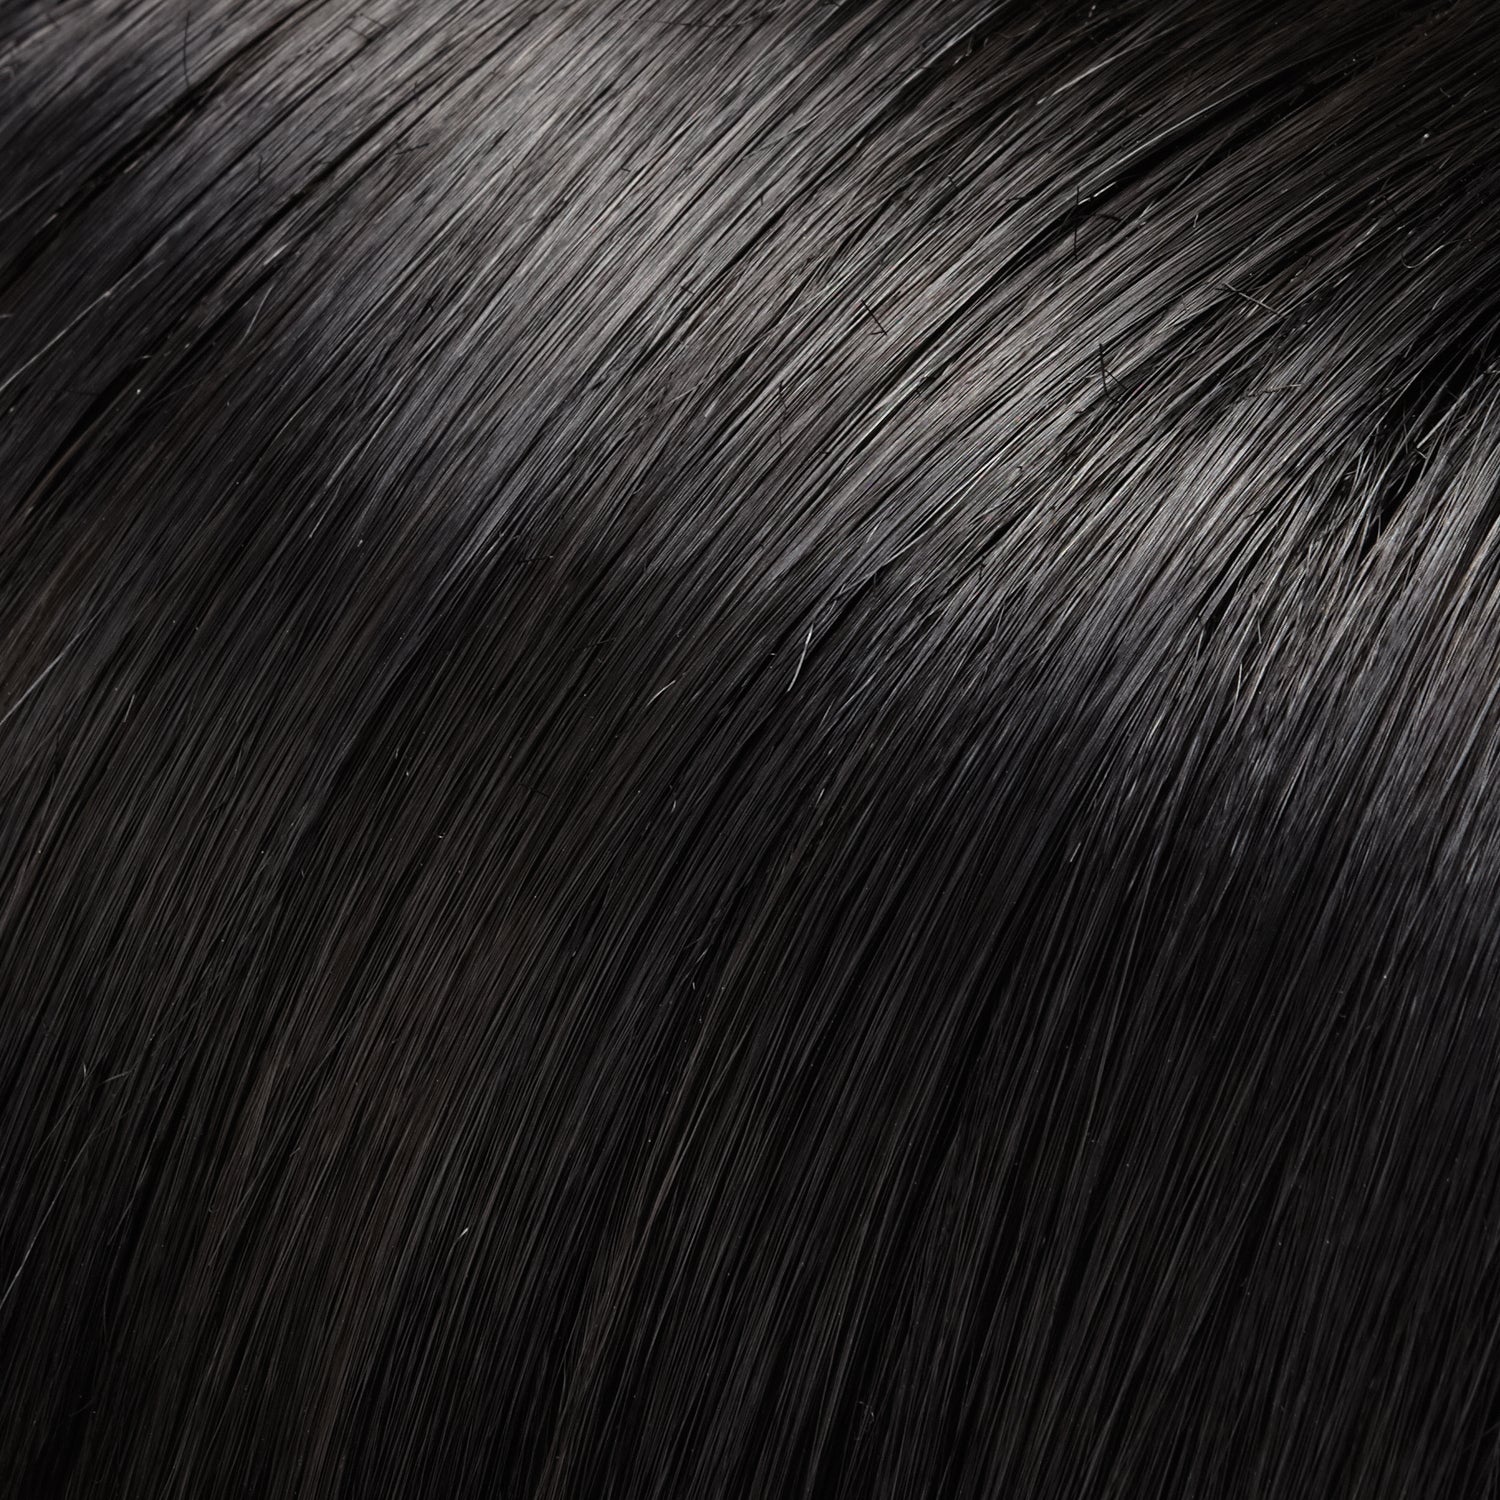 Angelique Large wig - Jon Renau O'solite Collection